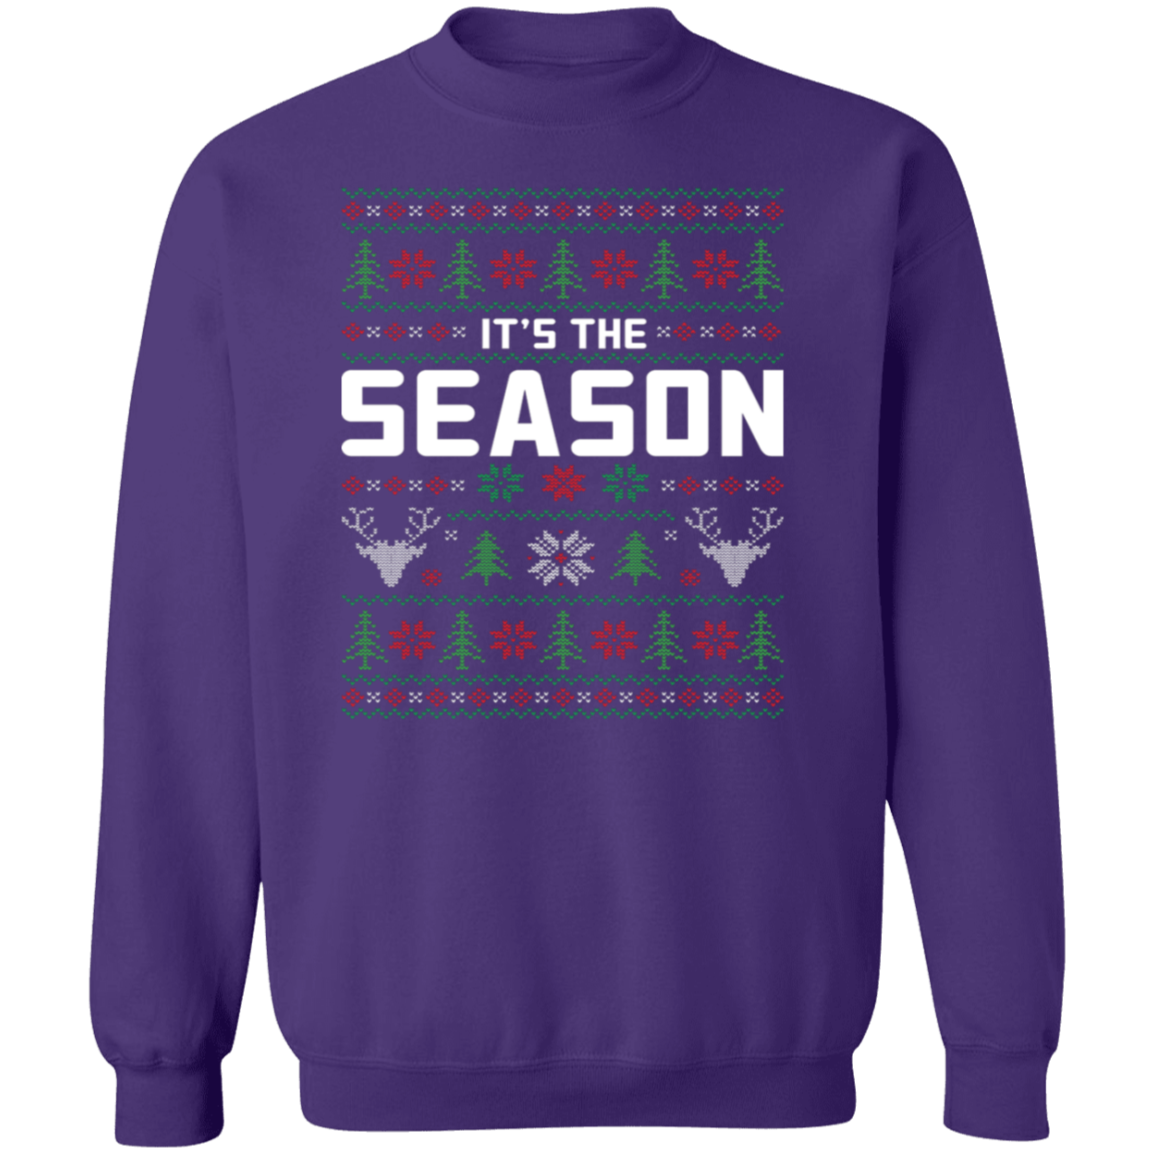 It's The Season - Unisex Ugly Sweater, Christmas, Winter, Fall